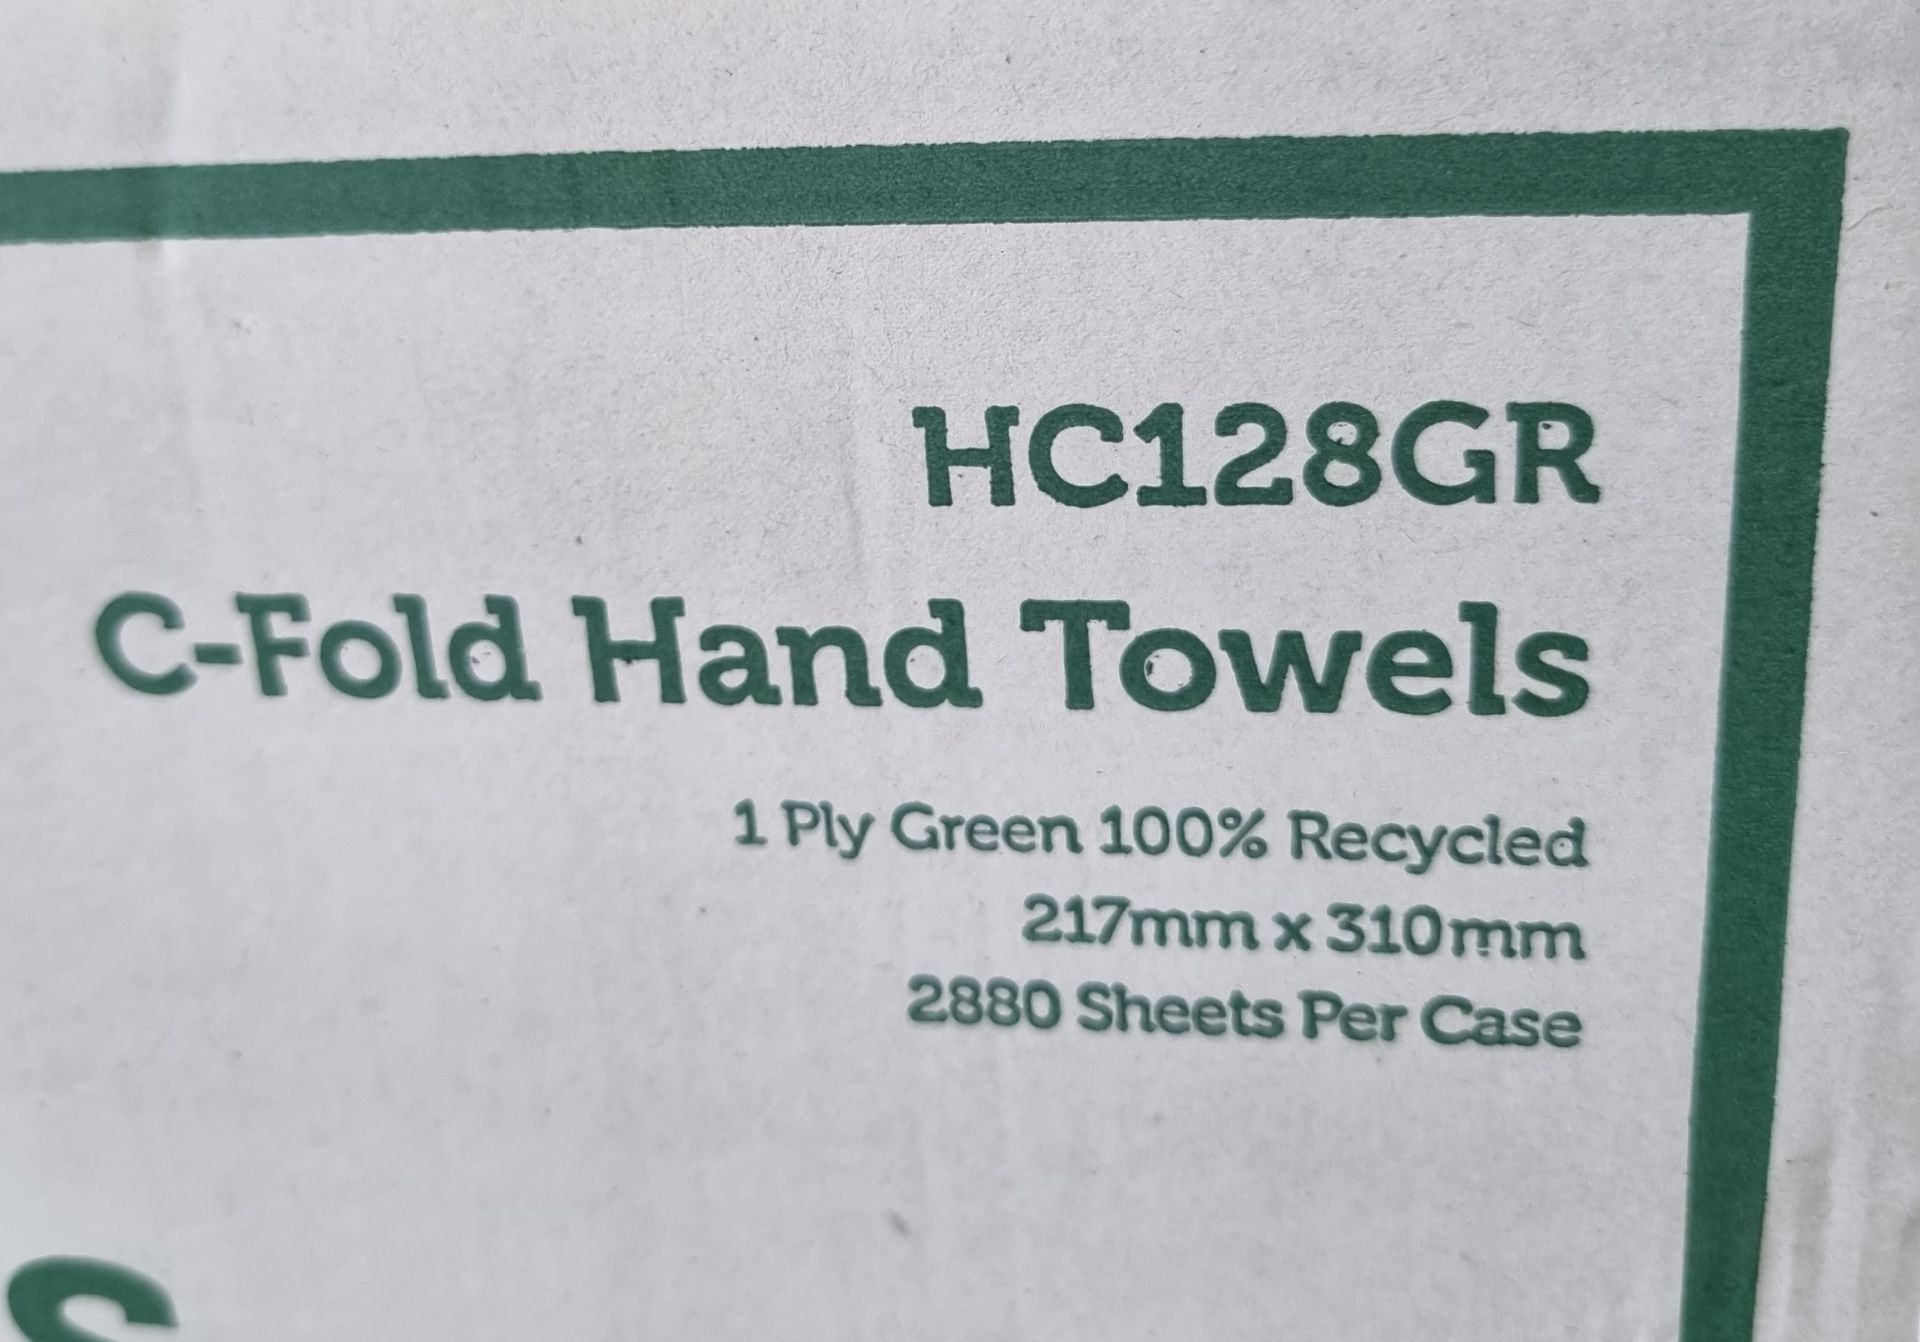 11x boxes of Northwood Essentials C-fold hand towels - 217 x 310mm - 2880 sheets per box - Image 3 of 4